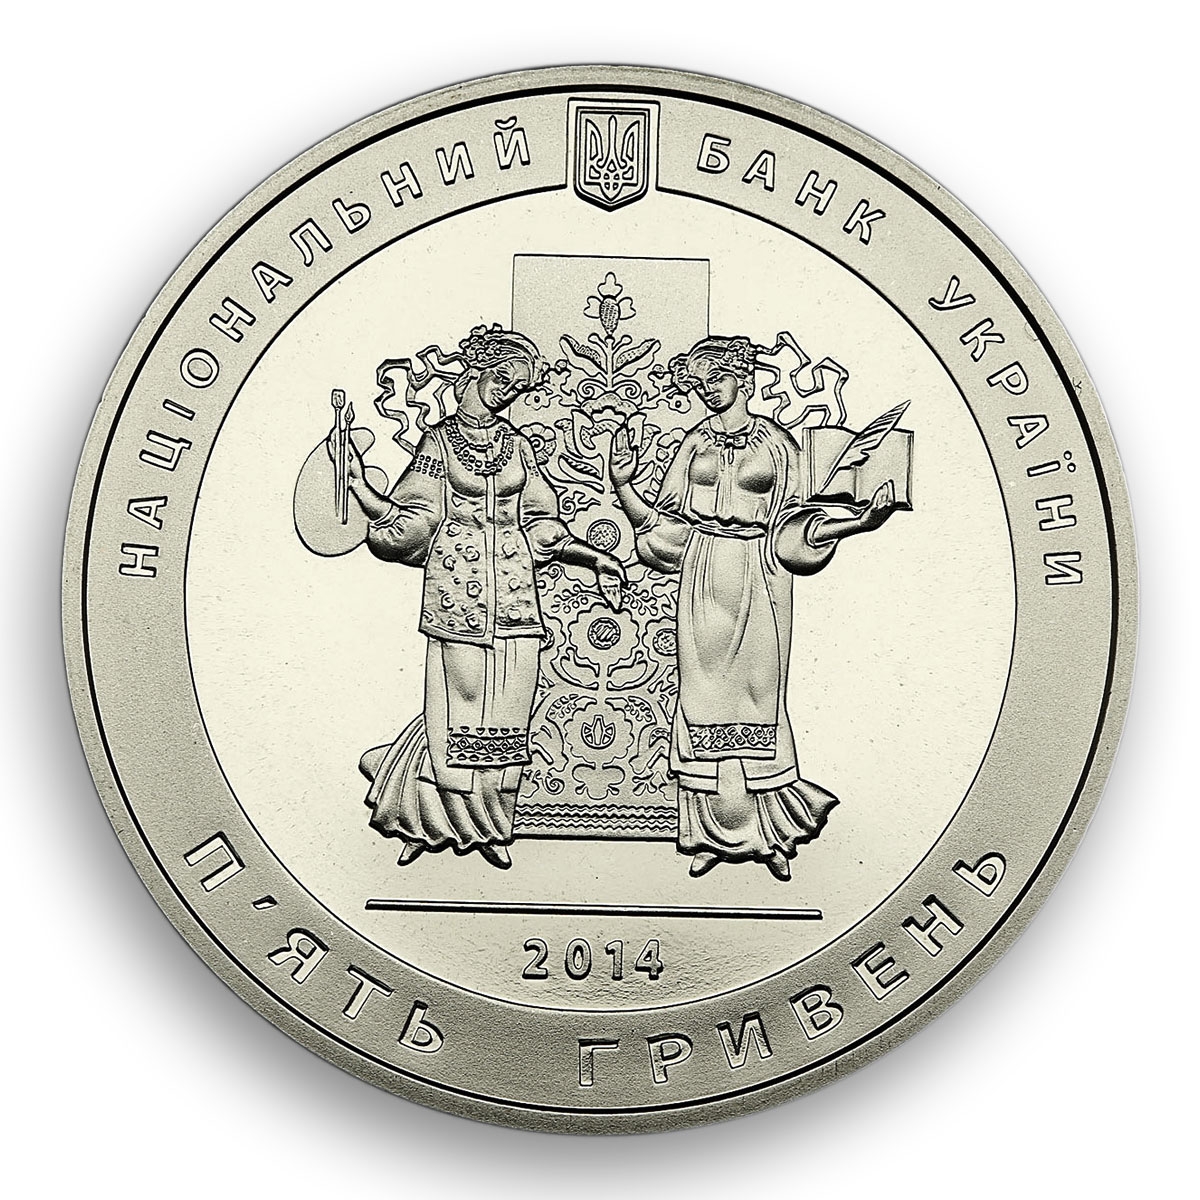 Ukraine 5 hryvnia 200th anniversary of Taras Shevchenko`s birth nickel coin 2014